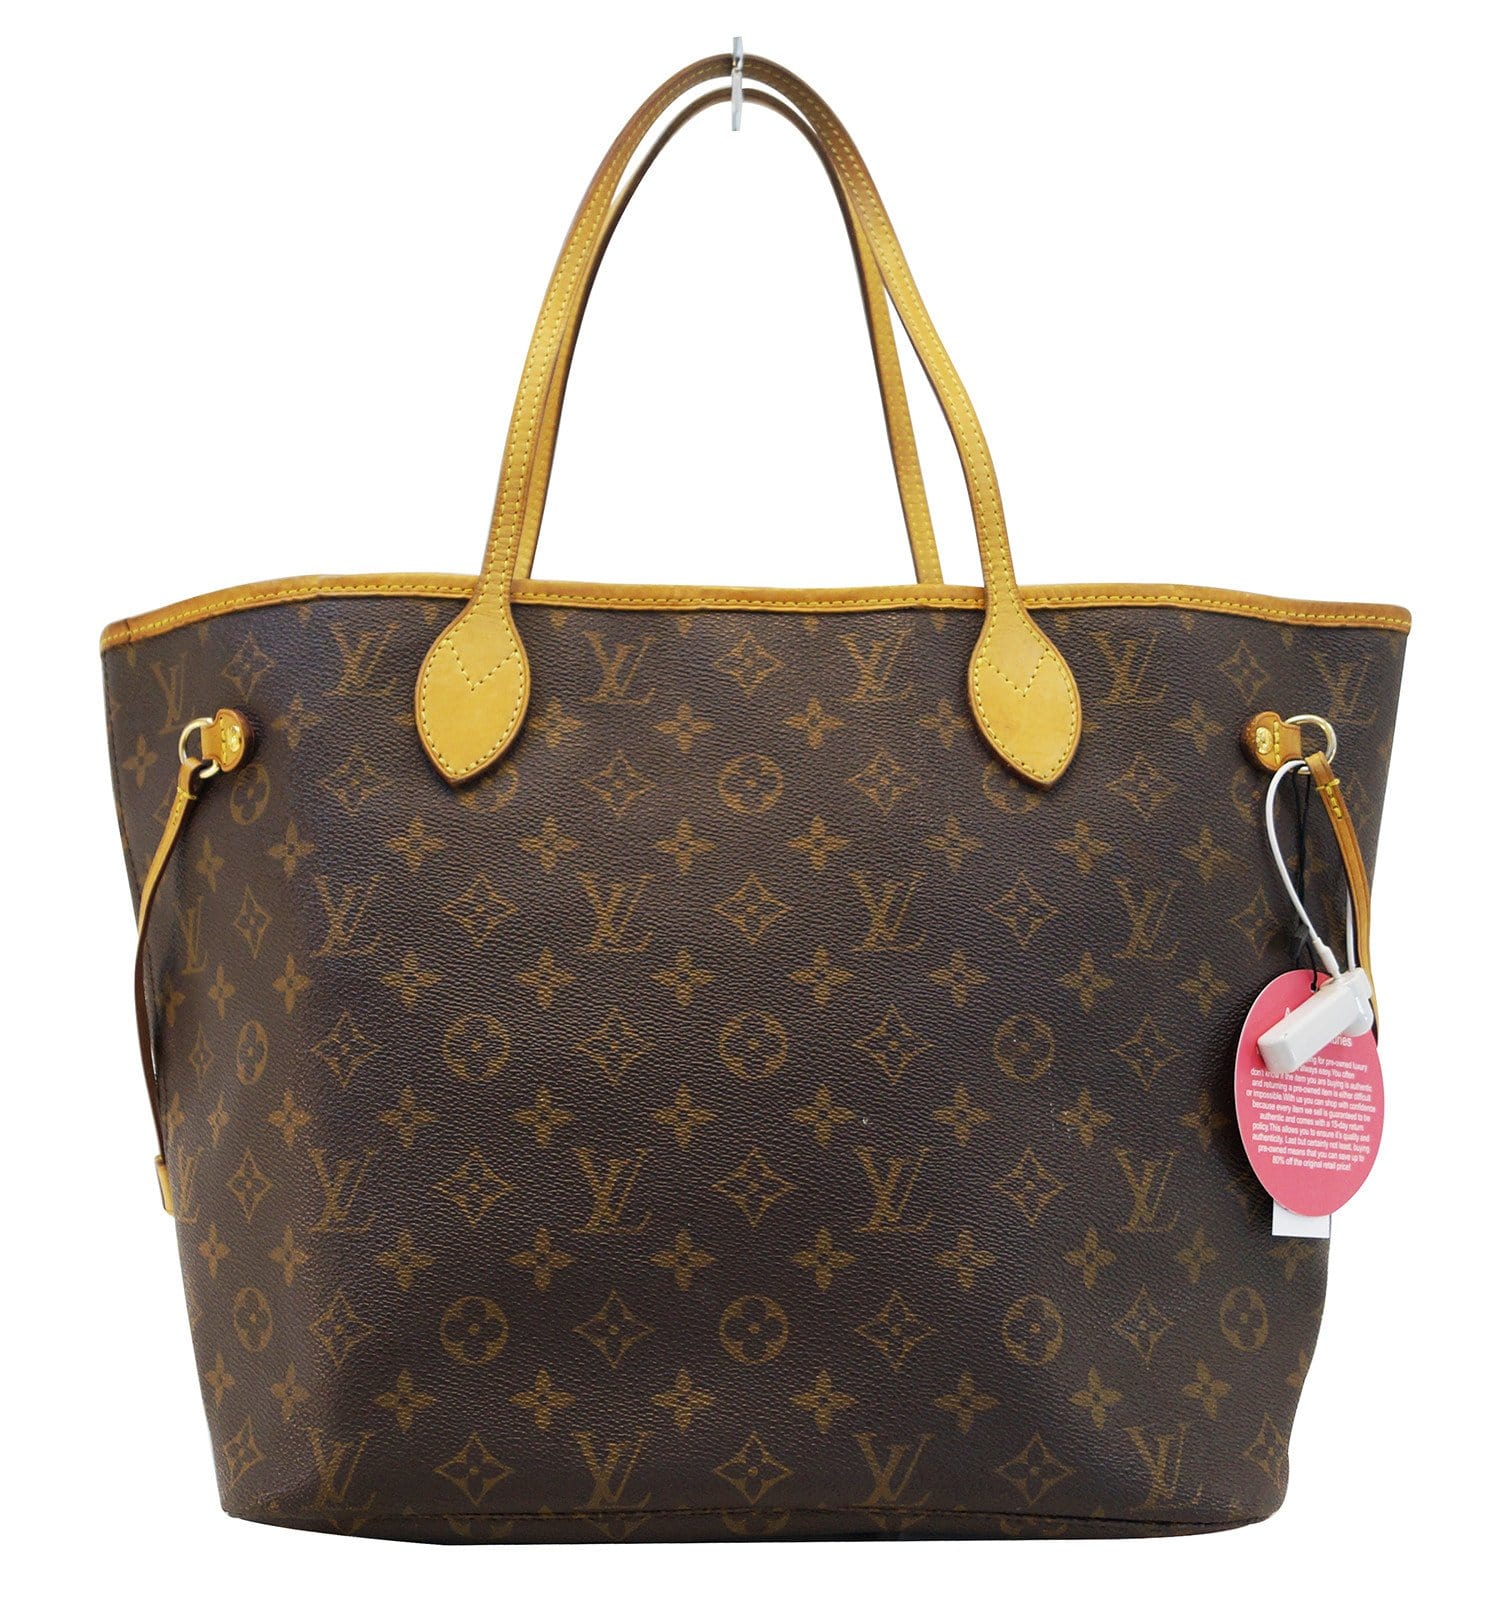 Louis Vuitton Bags You Should Never Buy